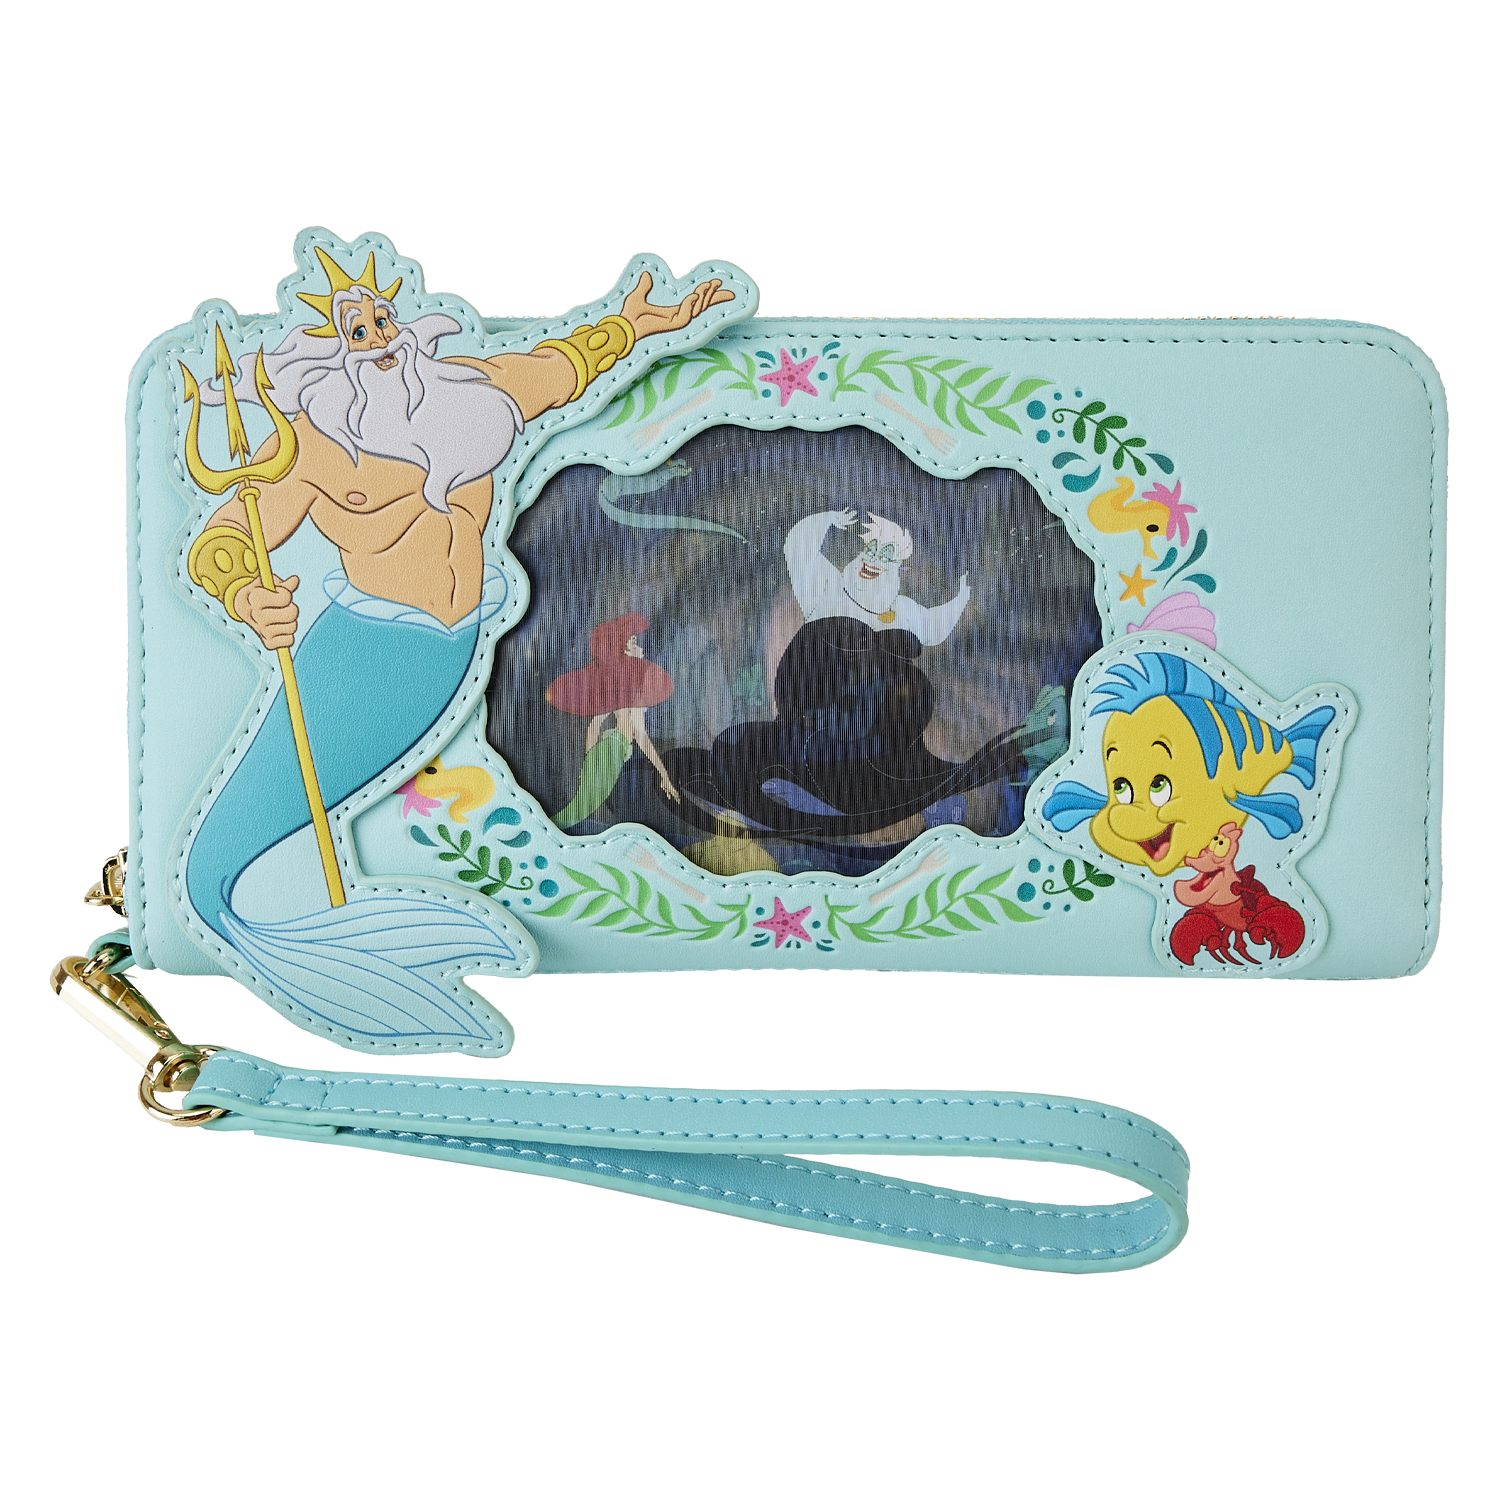 Buy Sleeping Beauty Princess Series Lenticular Zip Around Wristlet